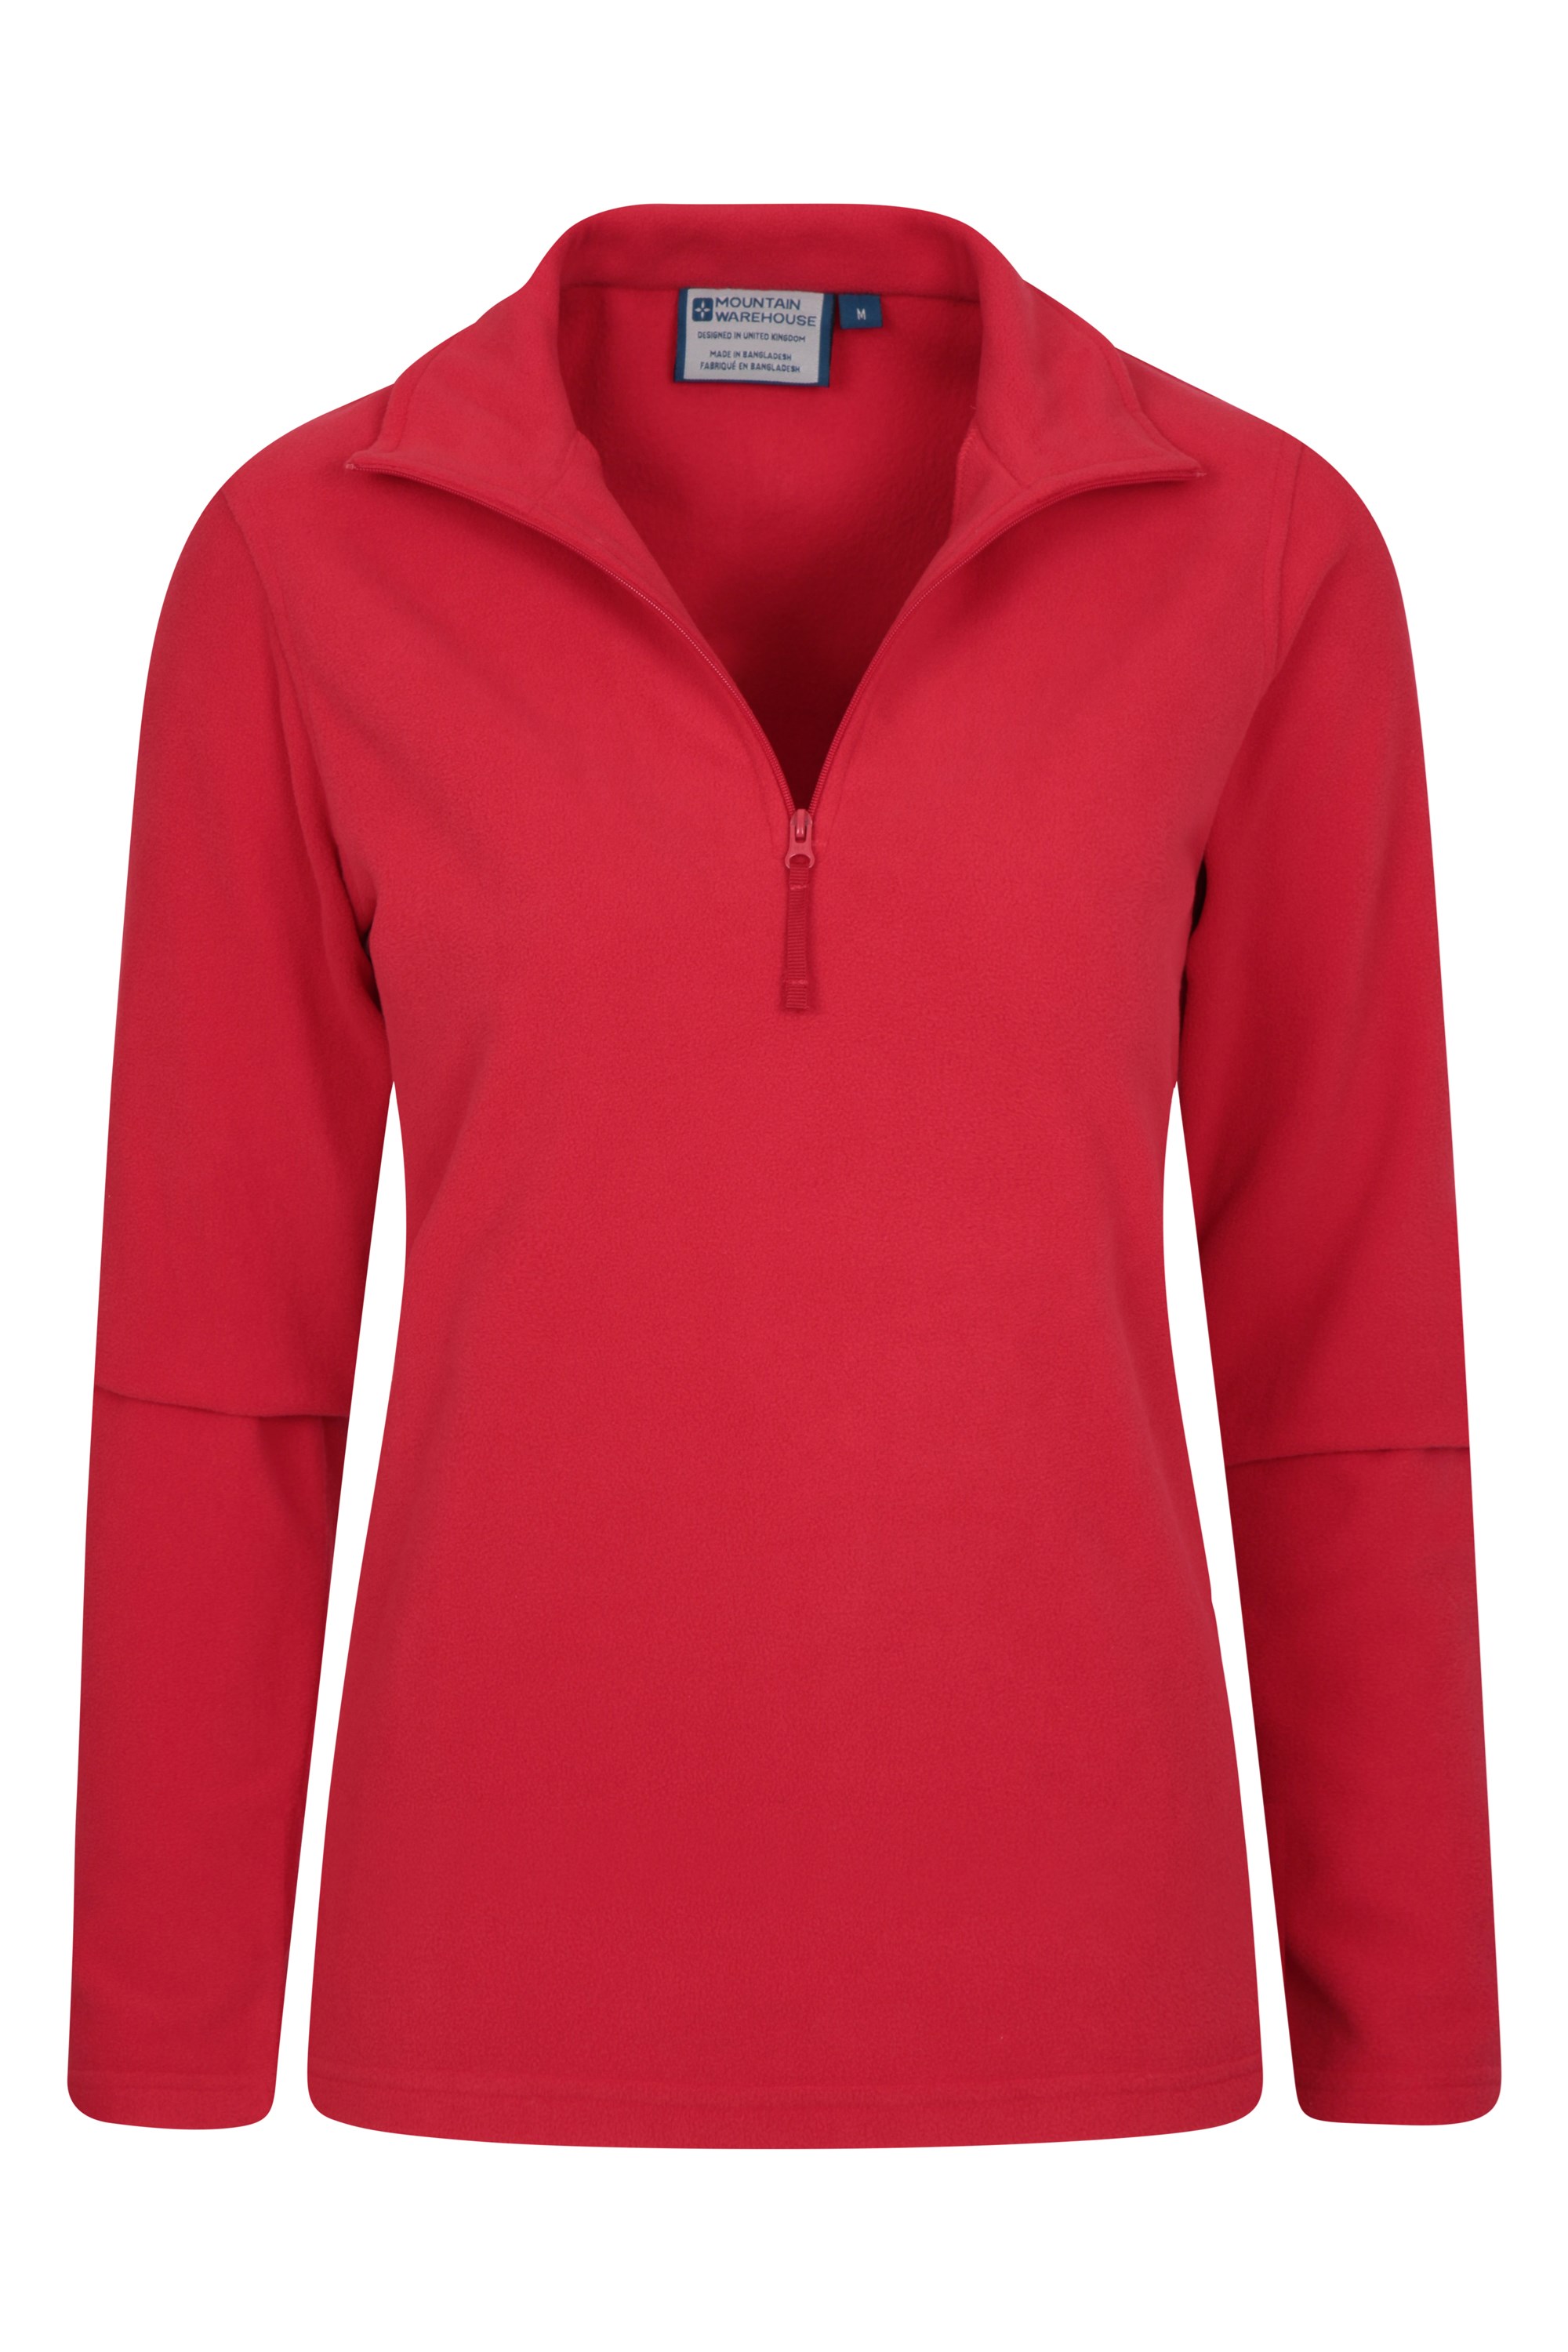 Mountain Warehouse Camber Womens Fleece Jacket Warm Winter Pullover